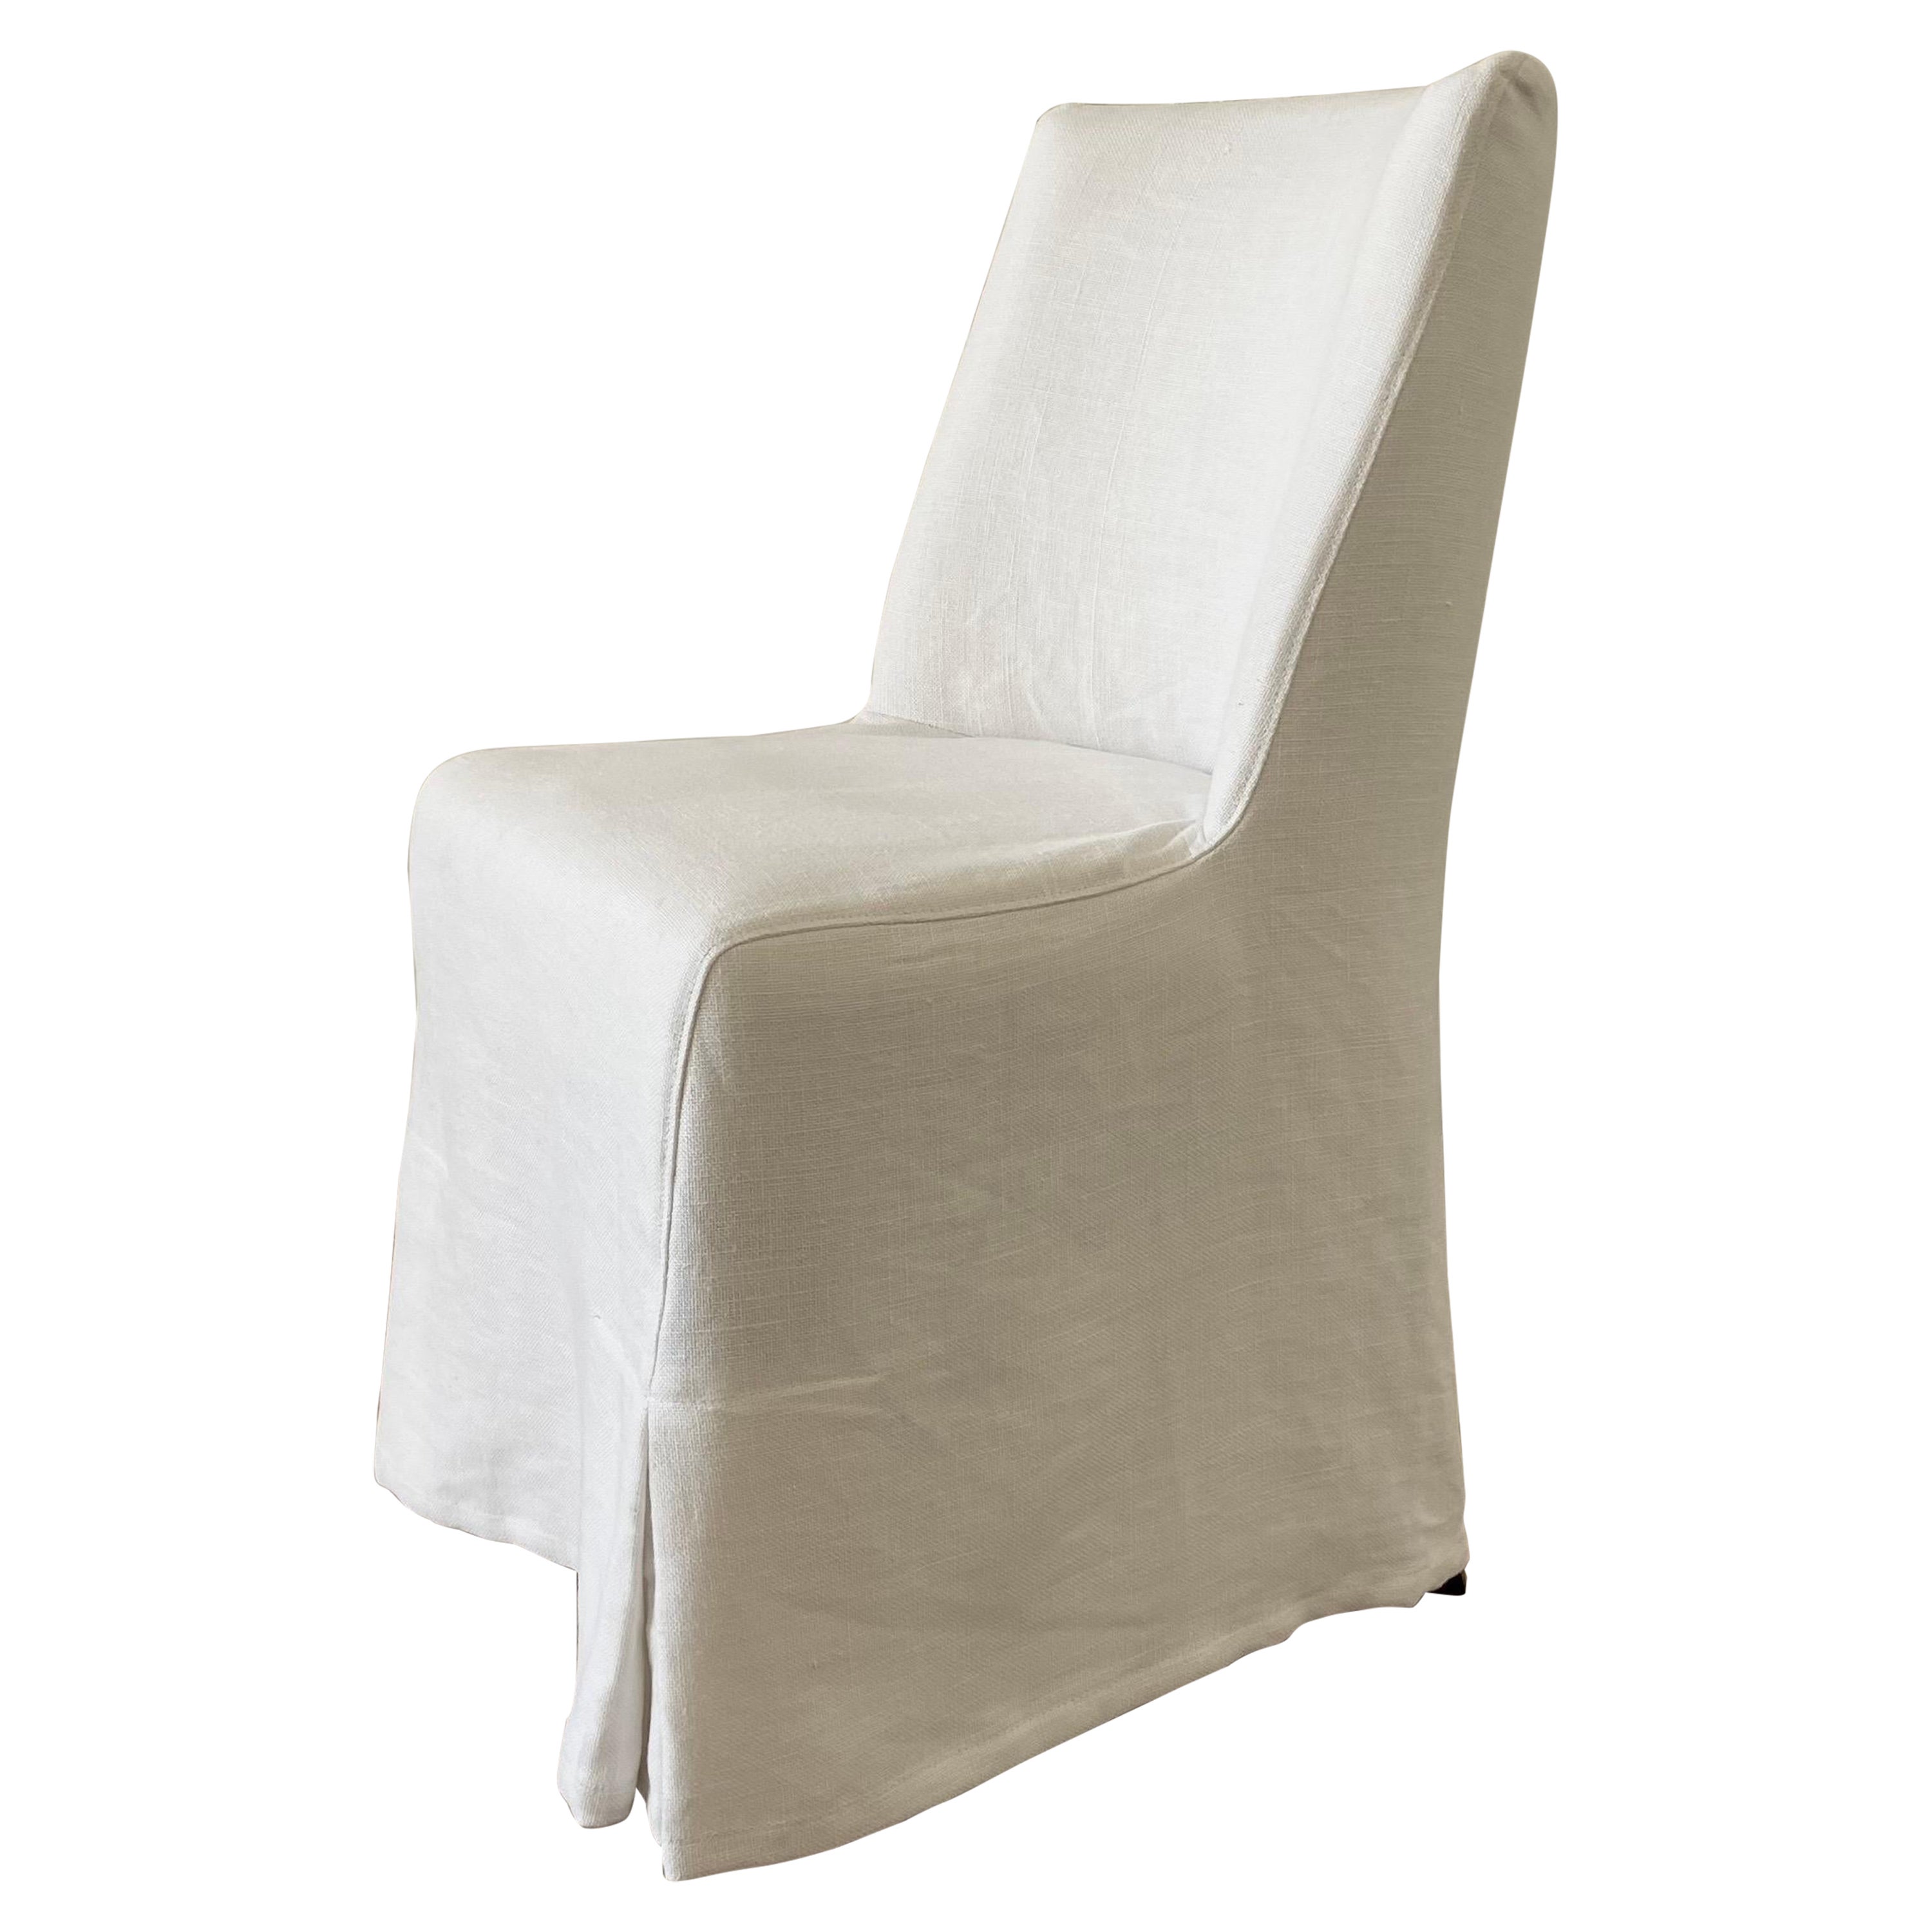 White Linen Slip Covered Dining Chair For Sale